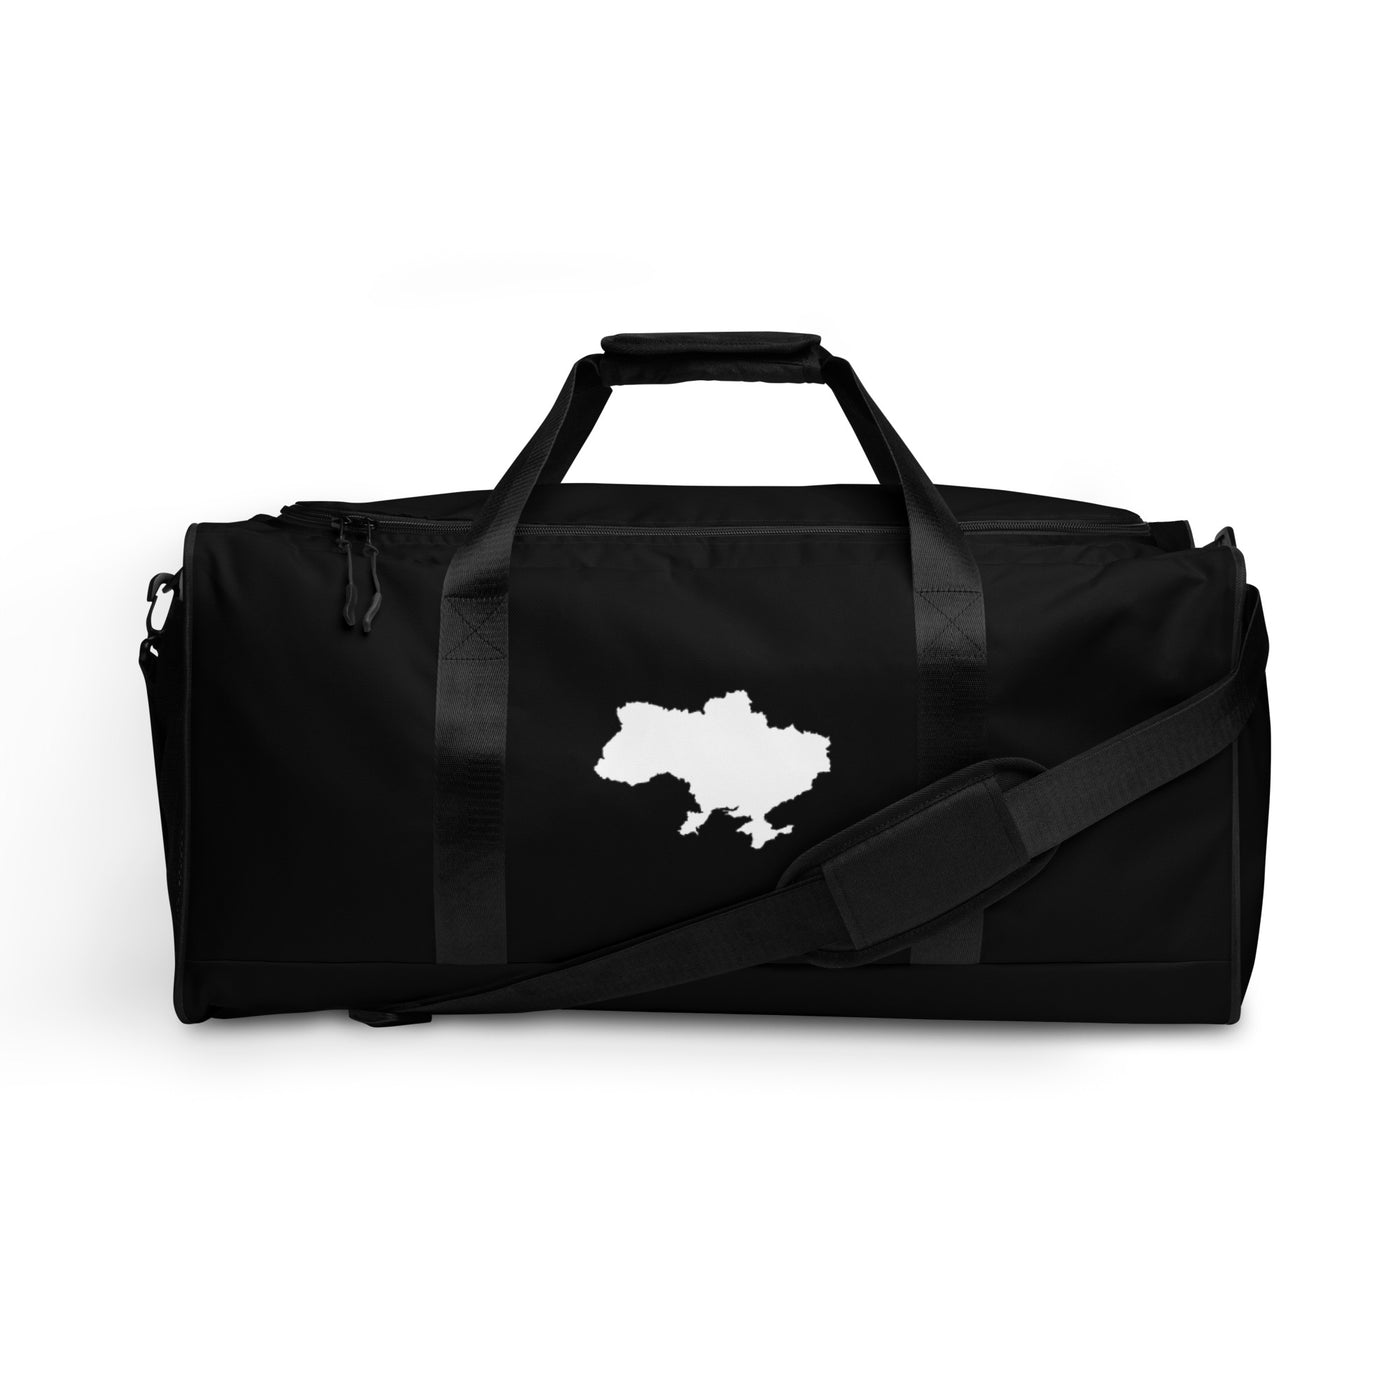 Map of Ukraine Duffle Bag